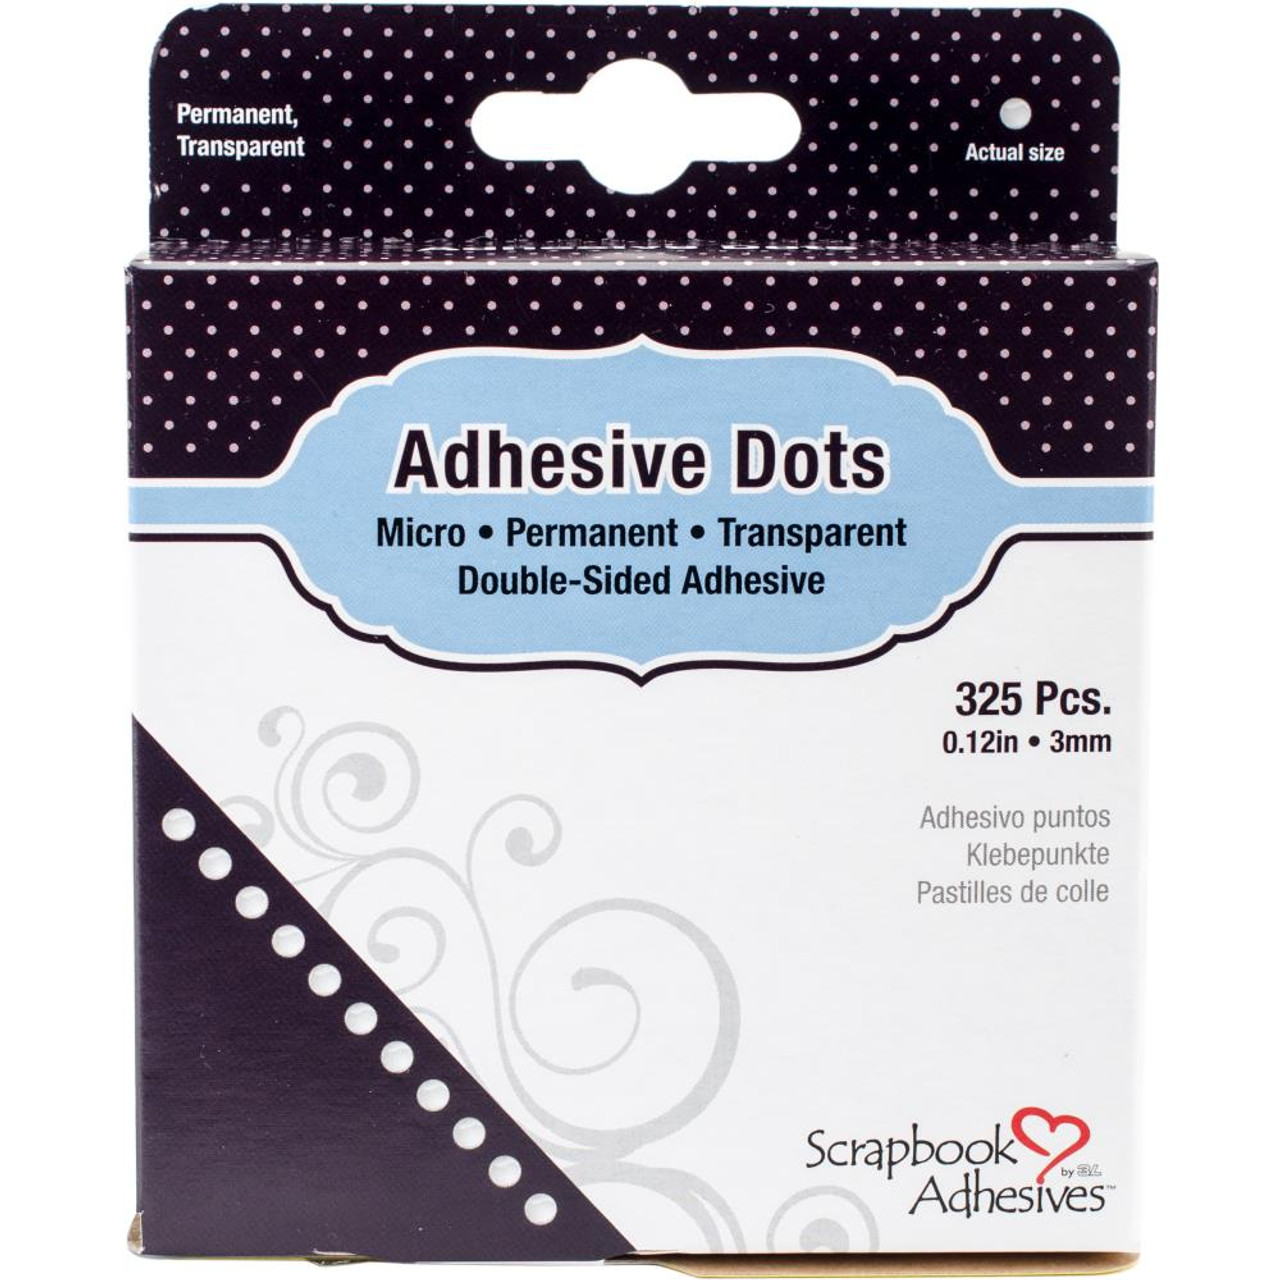 SCRAPBOOK ADHESIVES Permanent Adhesive Dots Roll: Micro (325 pc.) -  Scrapbook Generation